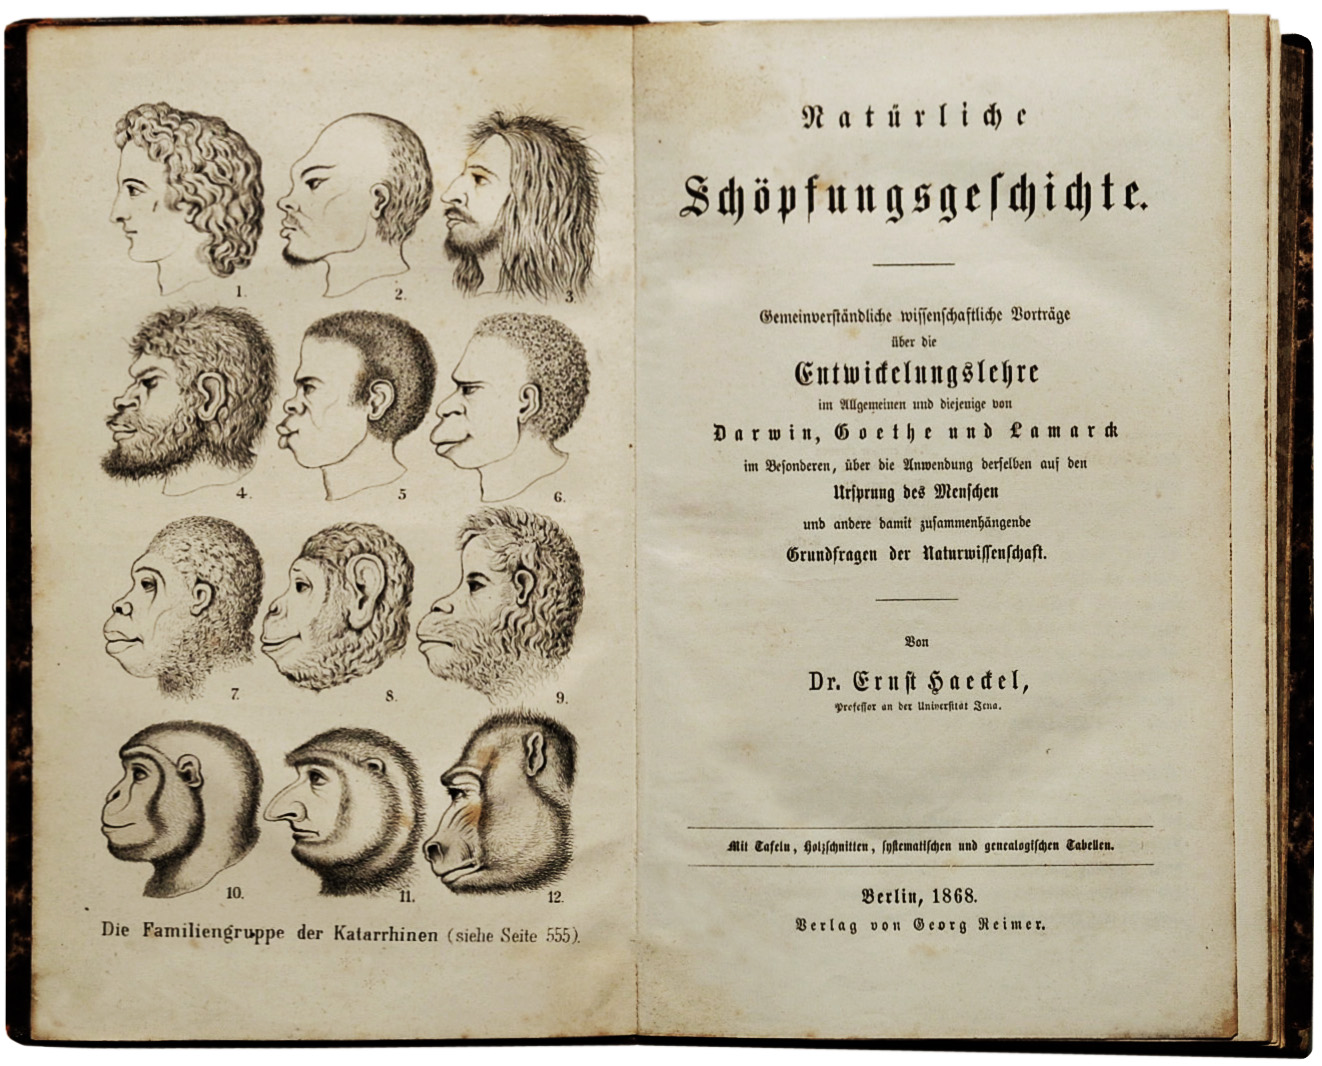 The frontispiece to Ernst Haeckel’s (1868) popular German book on Darwinism.